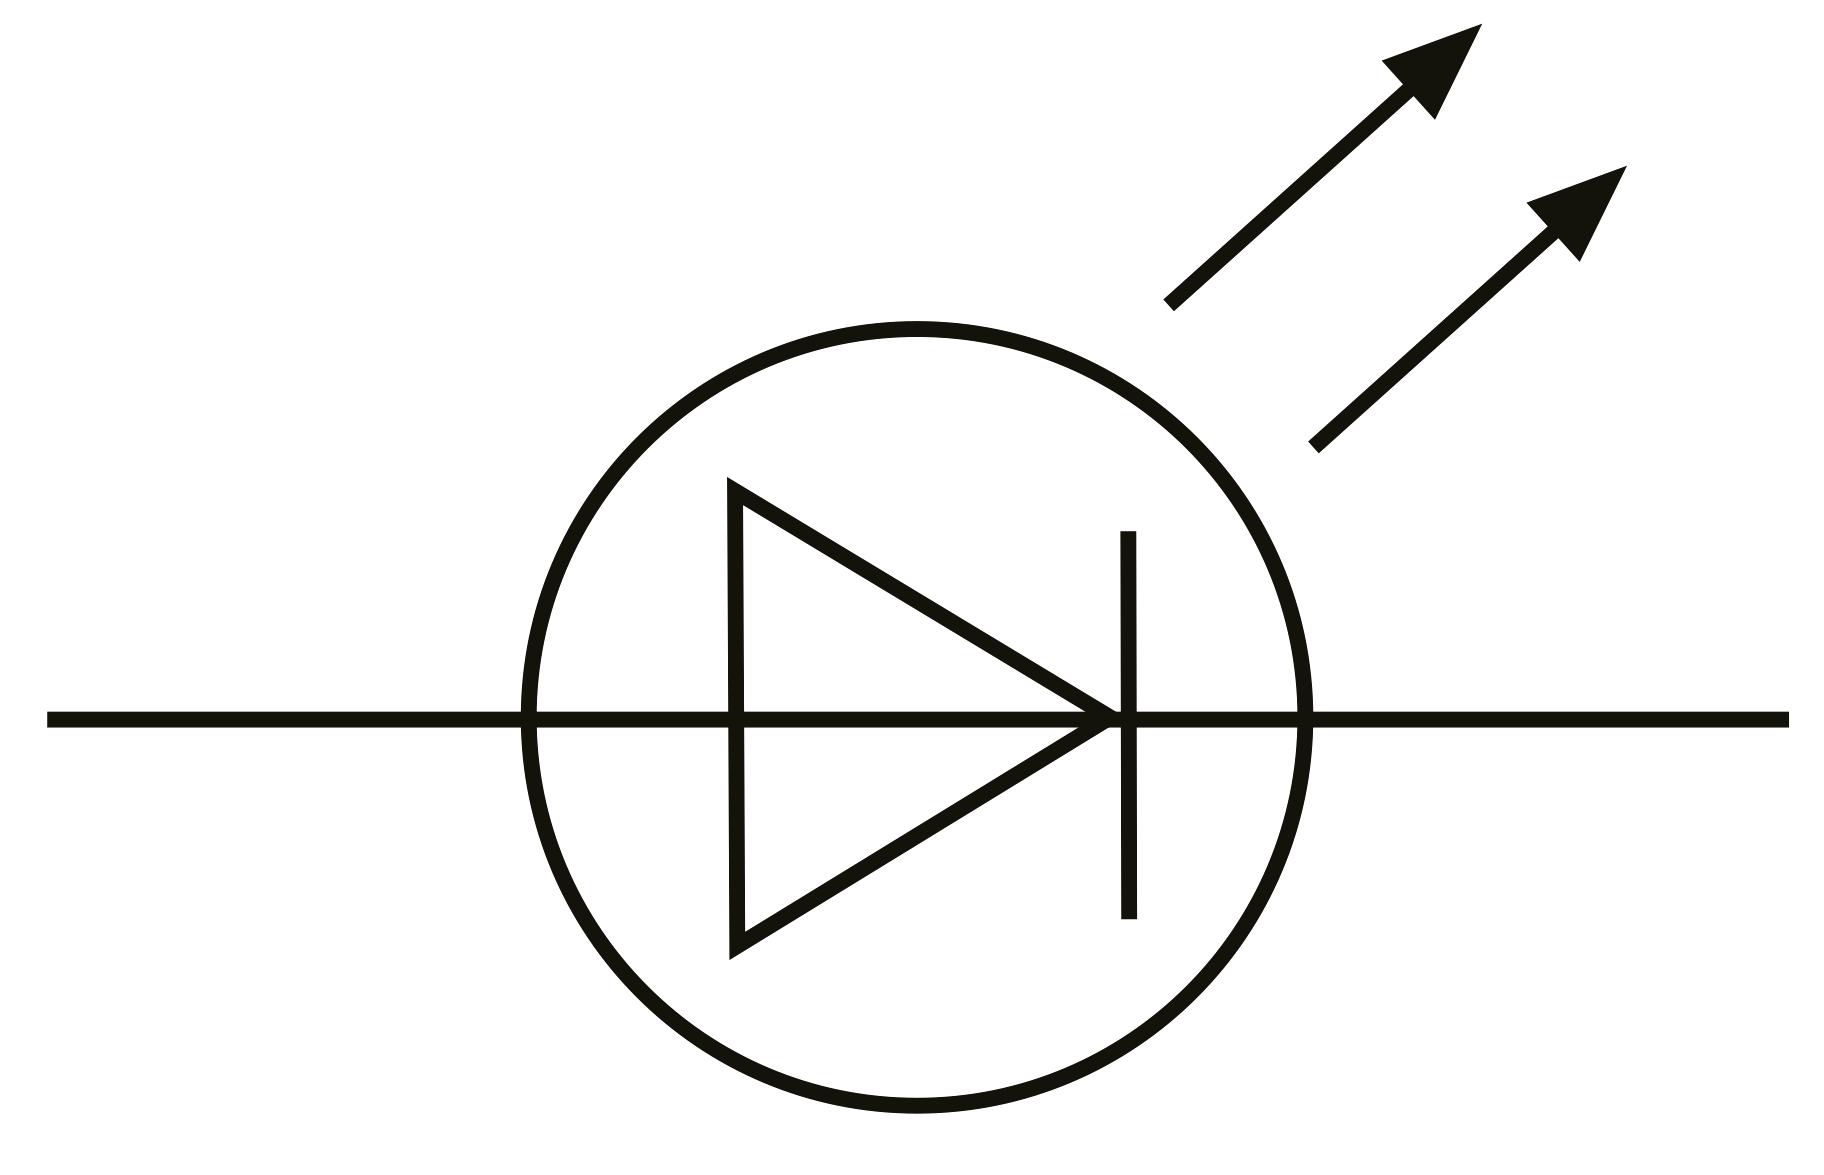 Wiring Diagram Symbols Wiring Diagram Led Symbol Wiring Diagram Local